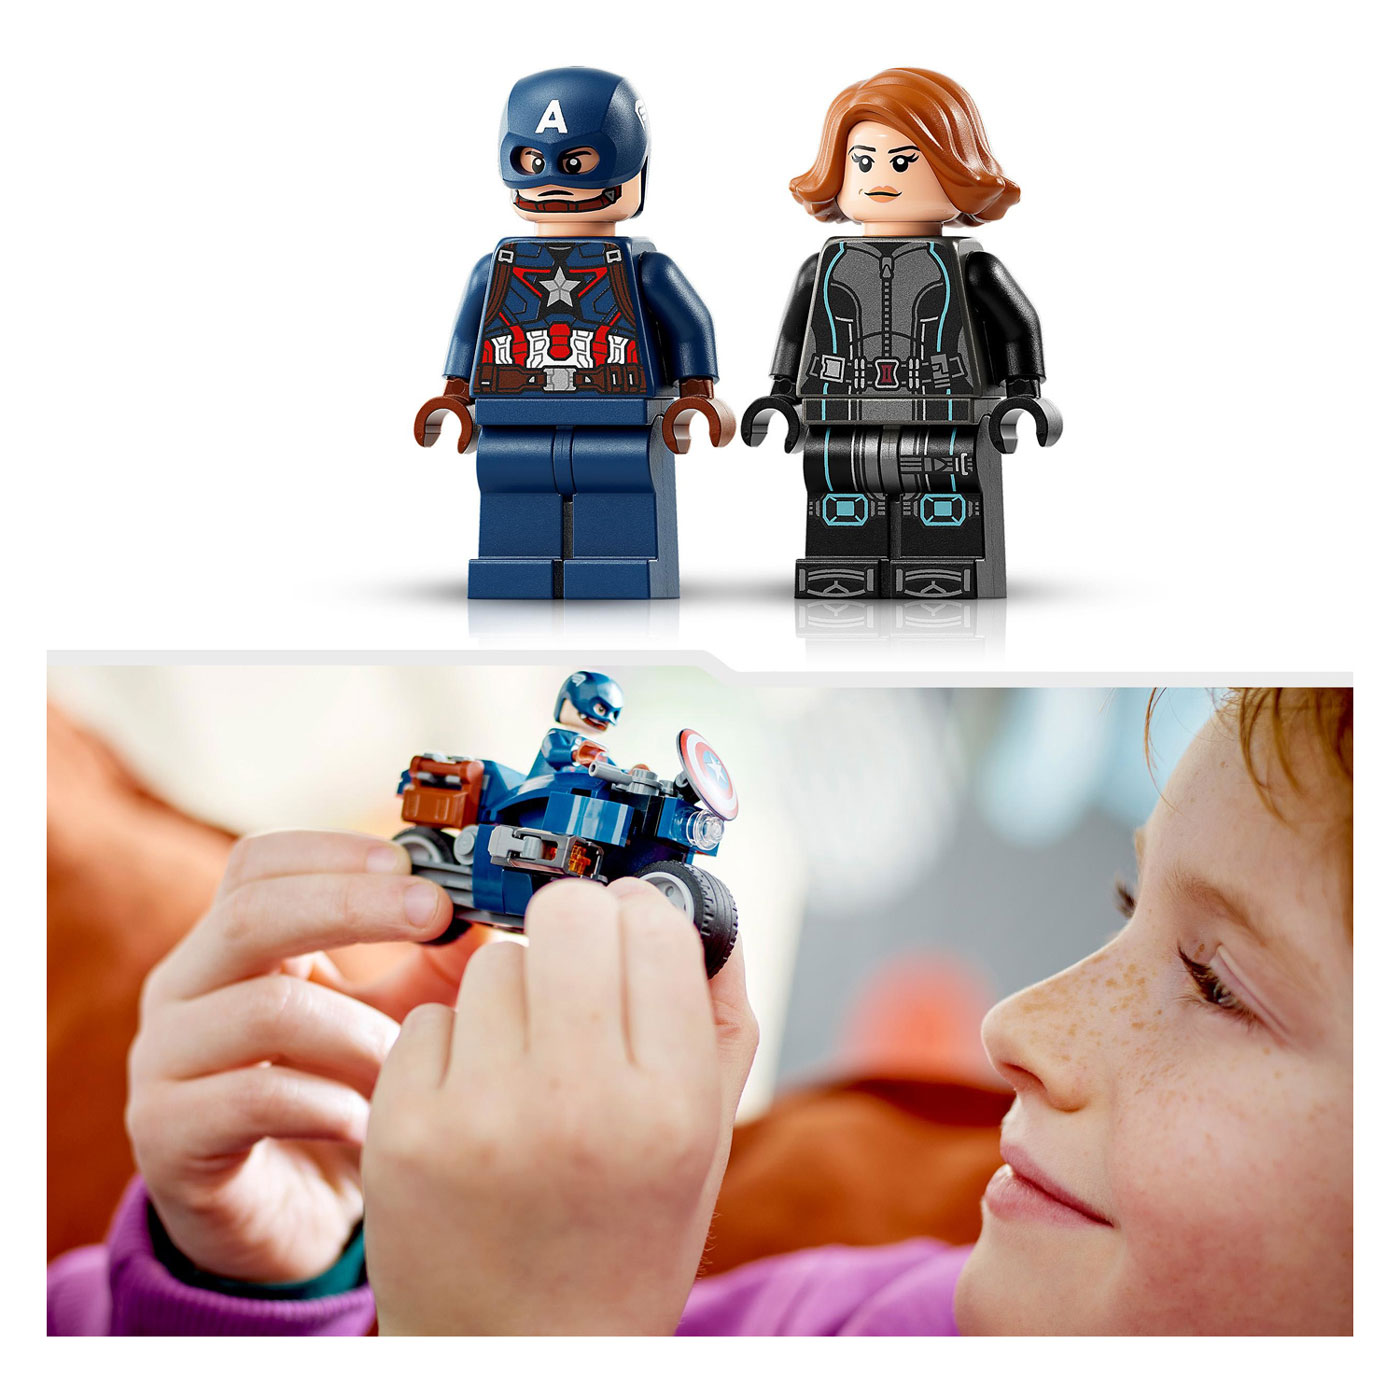 76260 LEGO Super Heroes Motorräder Black Widow und Captain America